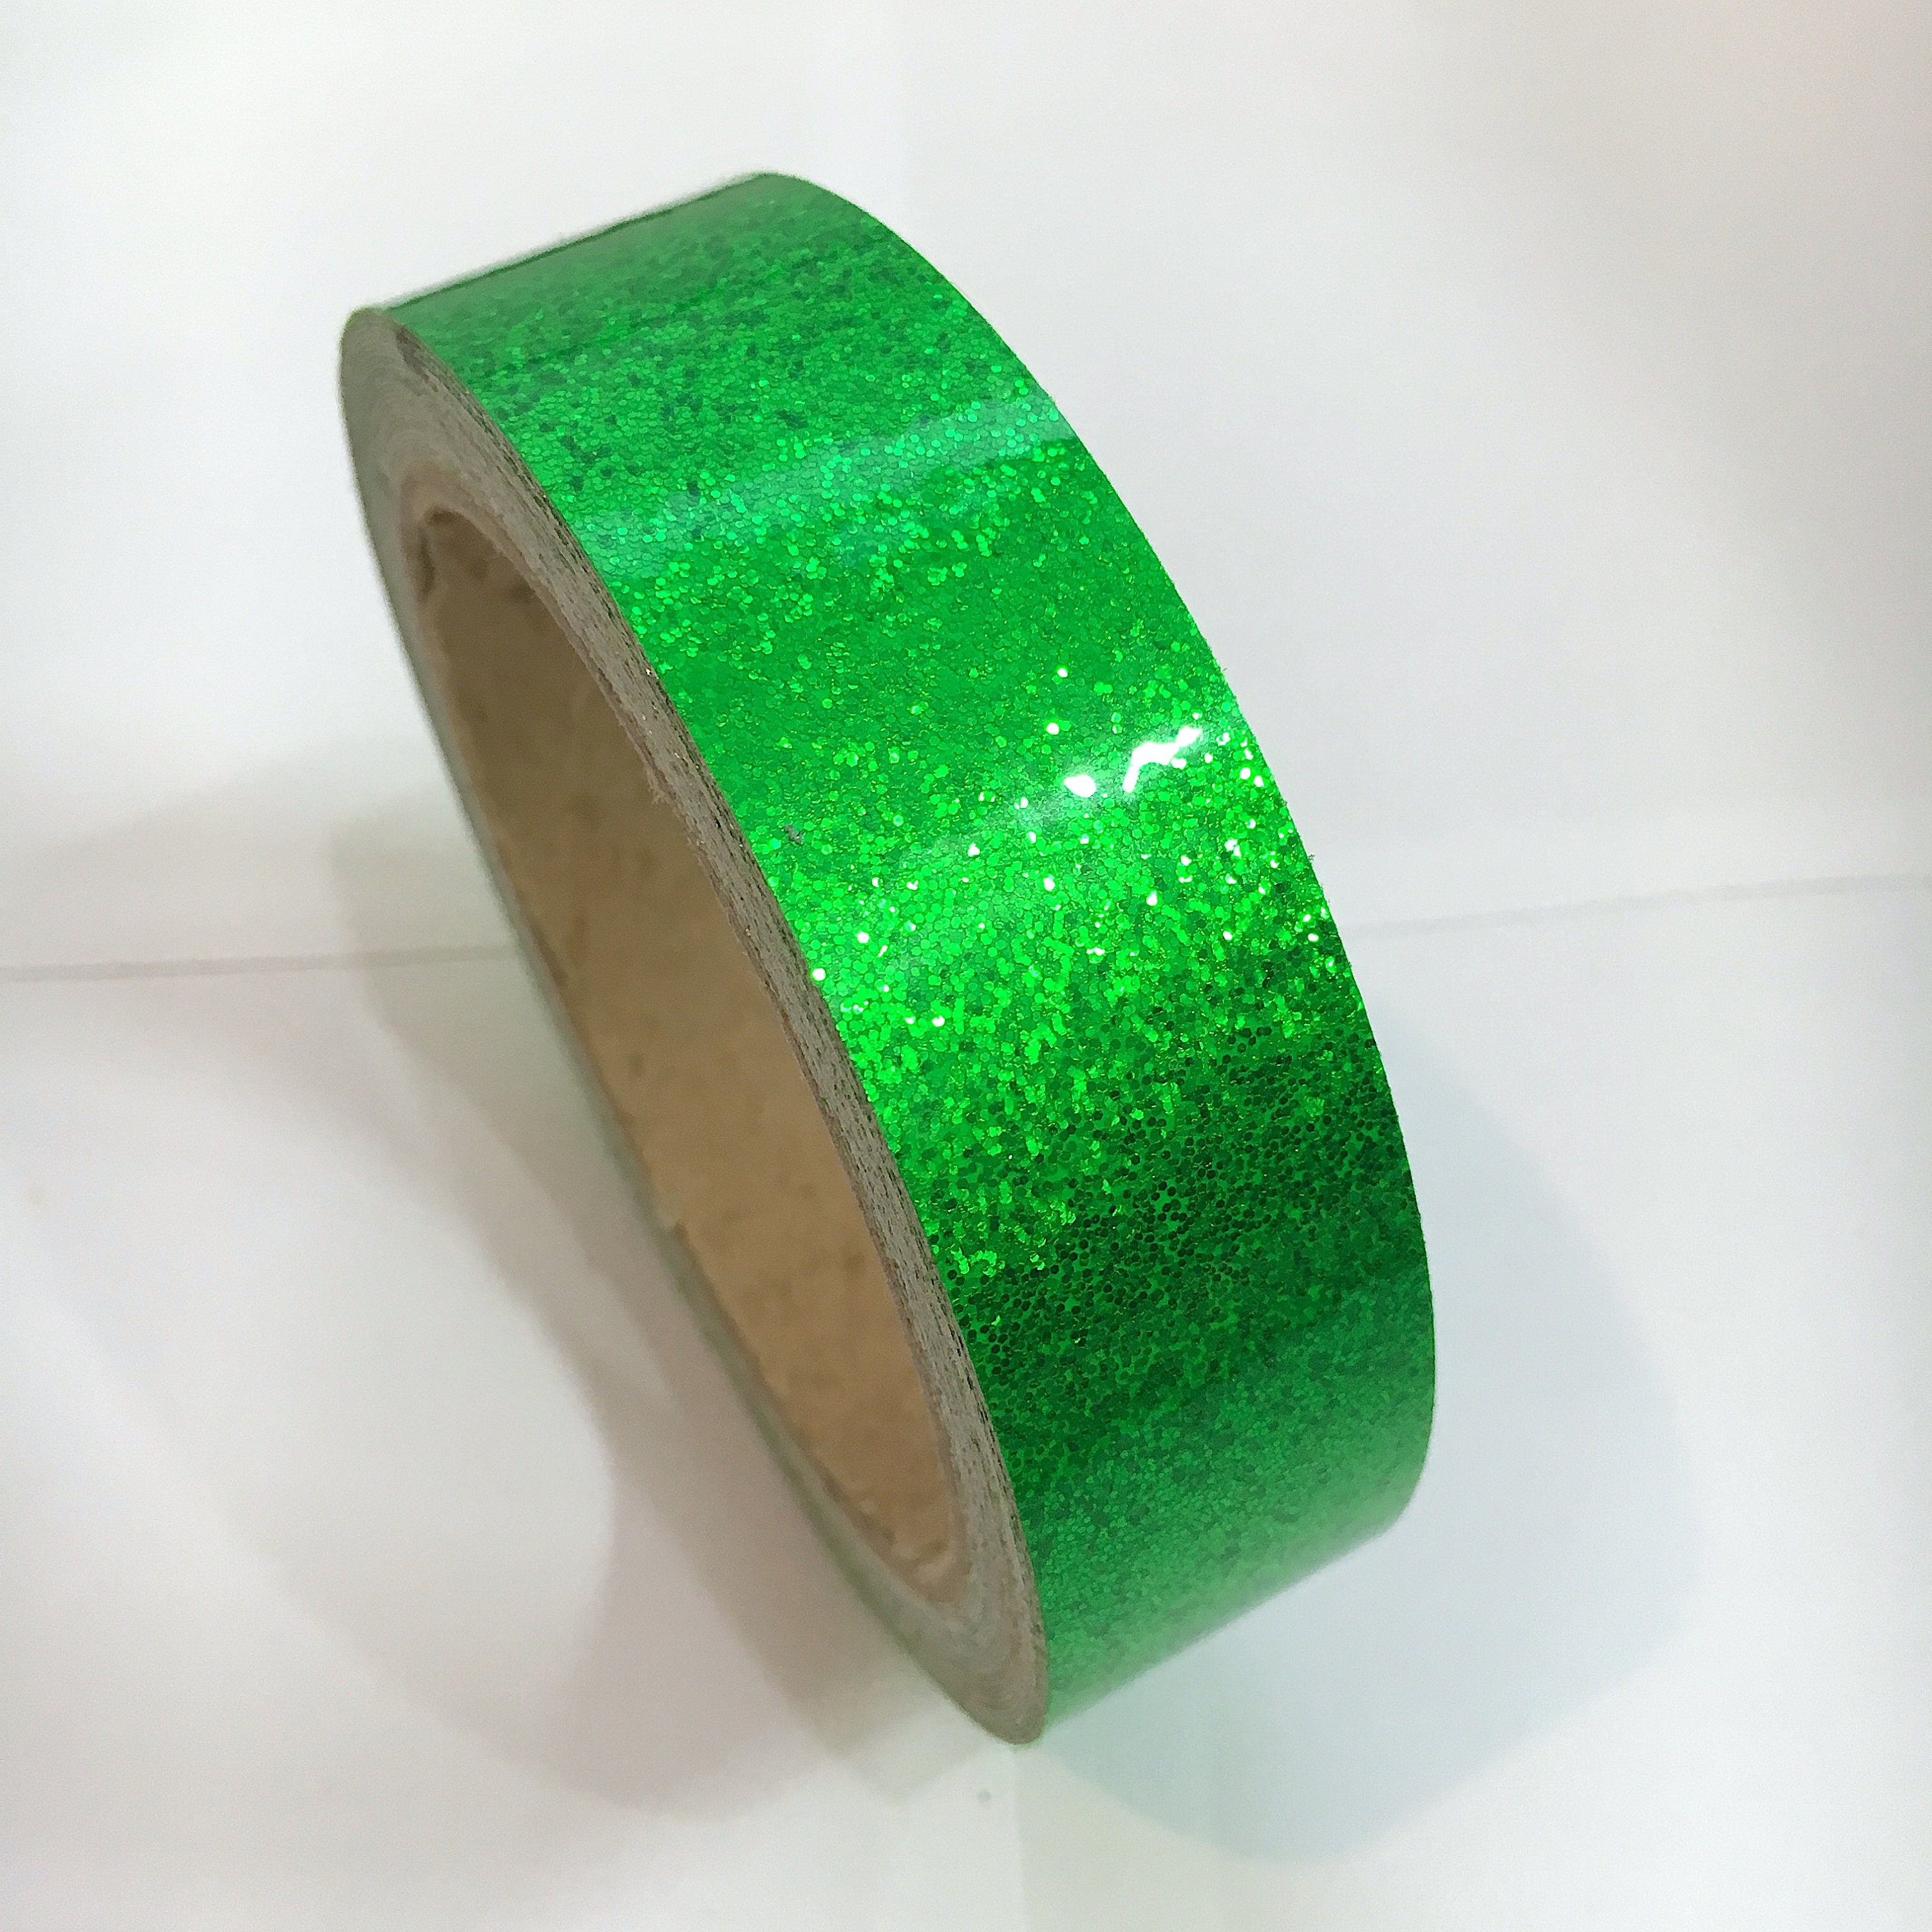 GENERICO Cinta Verde Reflectante Fluorescente Adhesiva 50 mm x 10 metros